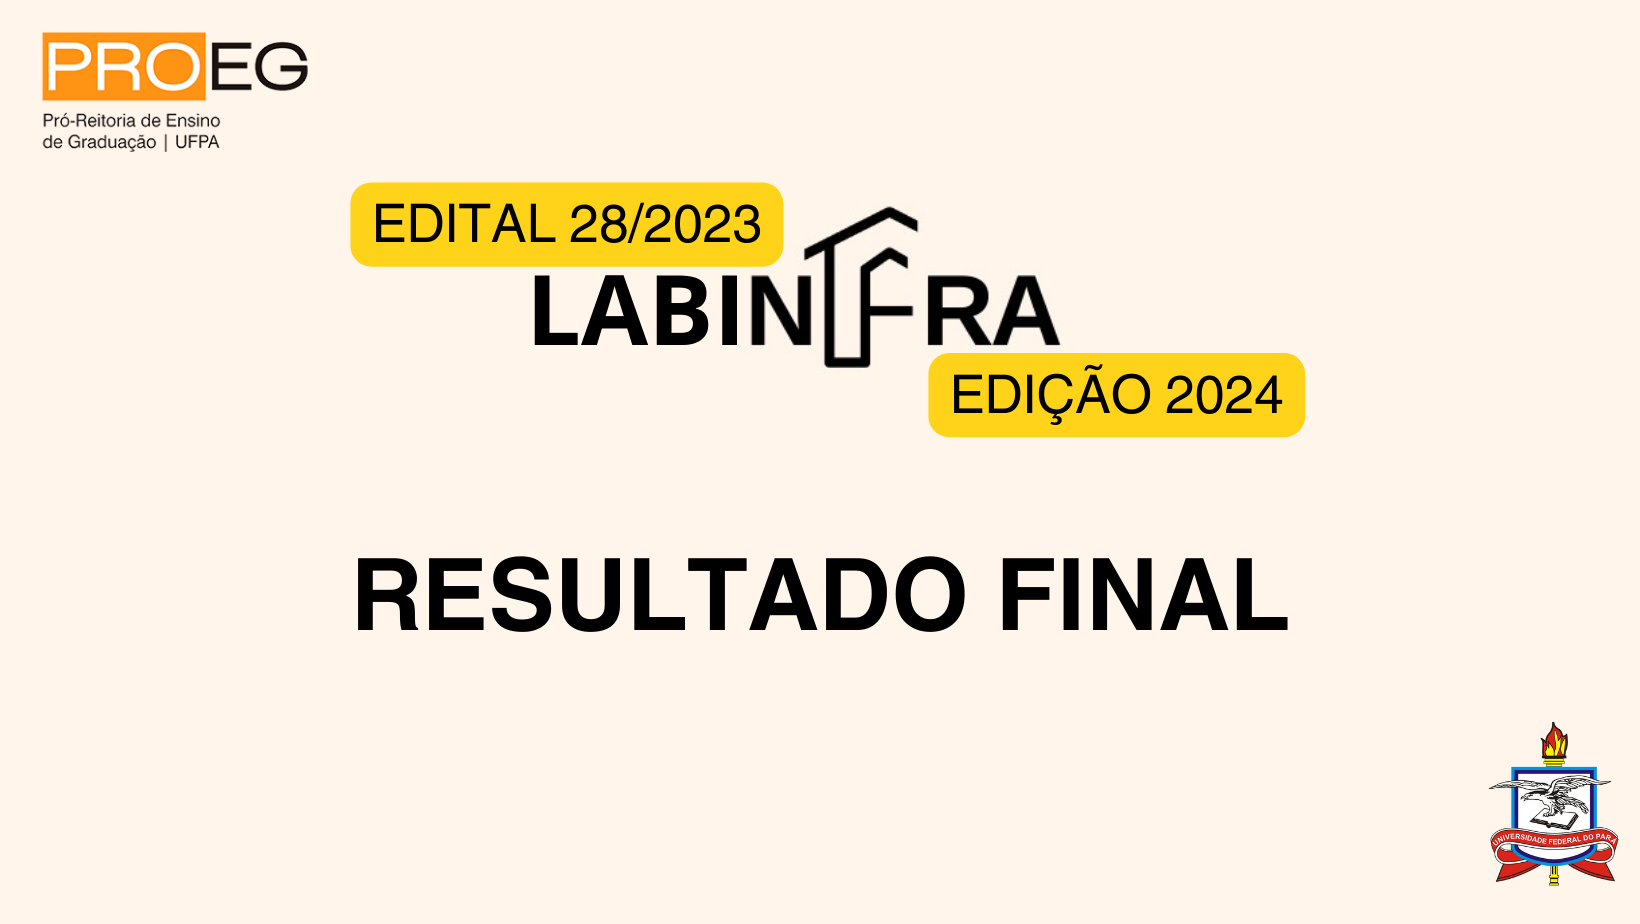 Resultado Final LABINFRA 2024